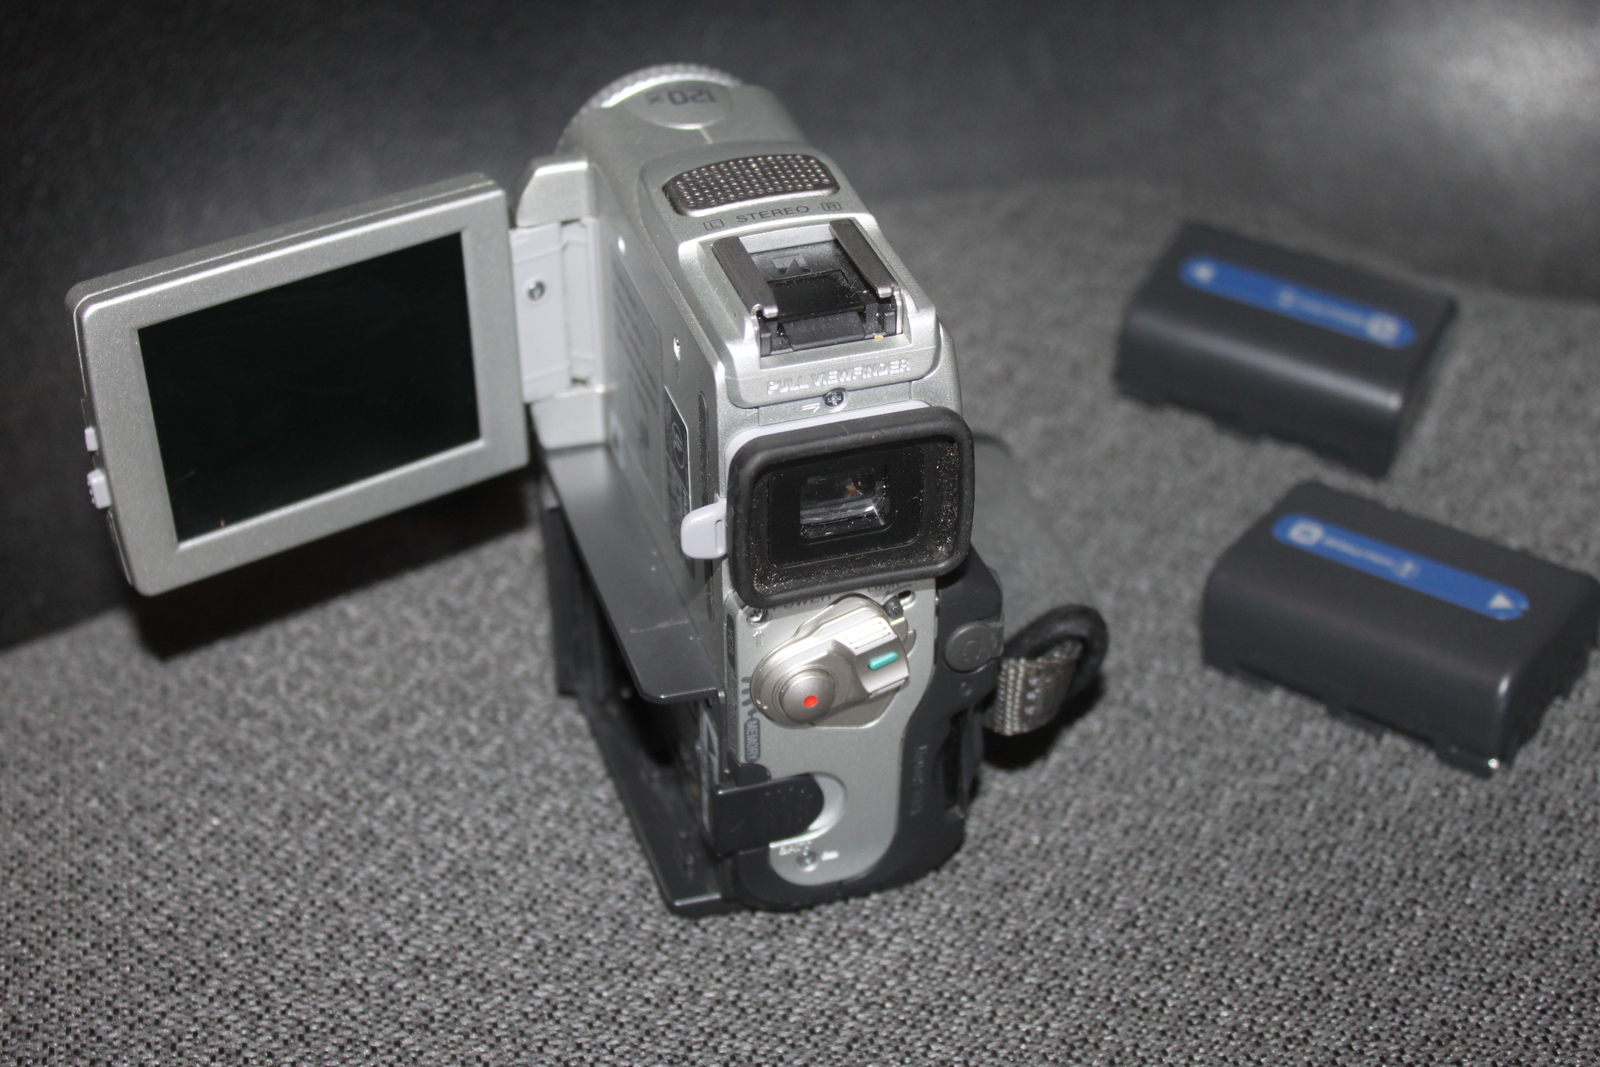 Sony DCR-PC101 Digital Video Camera MiniDV and 50 similar items